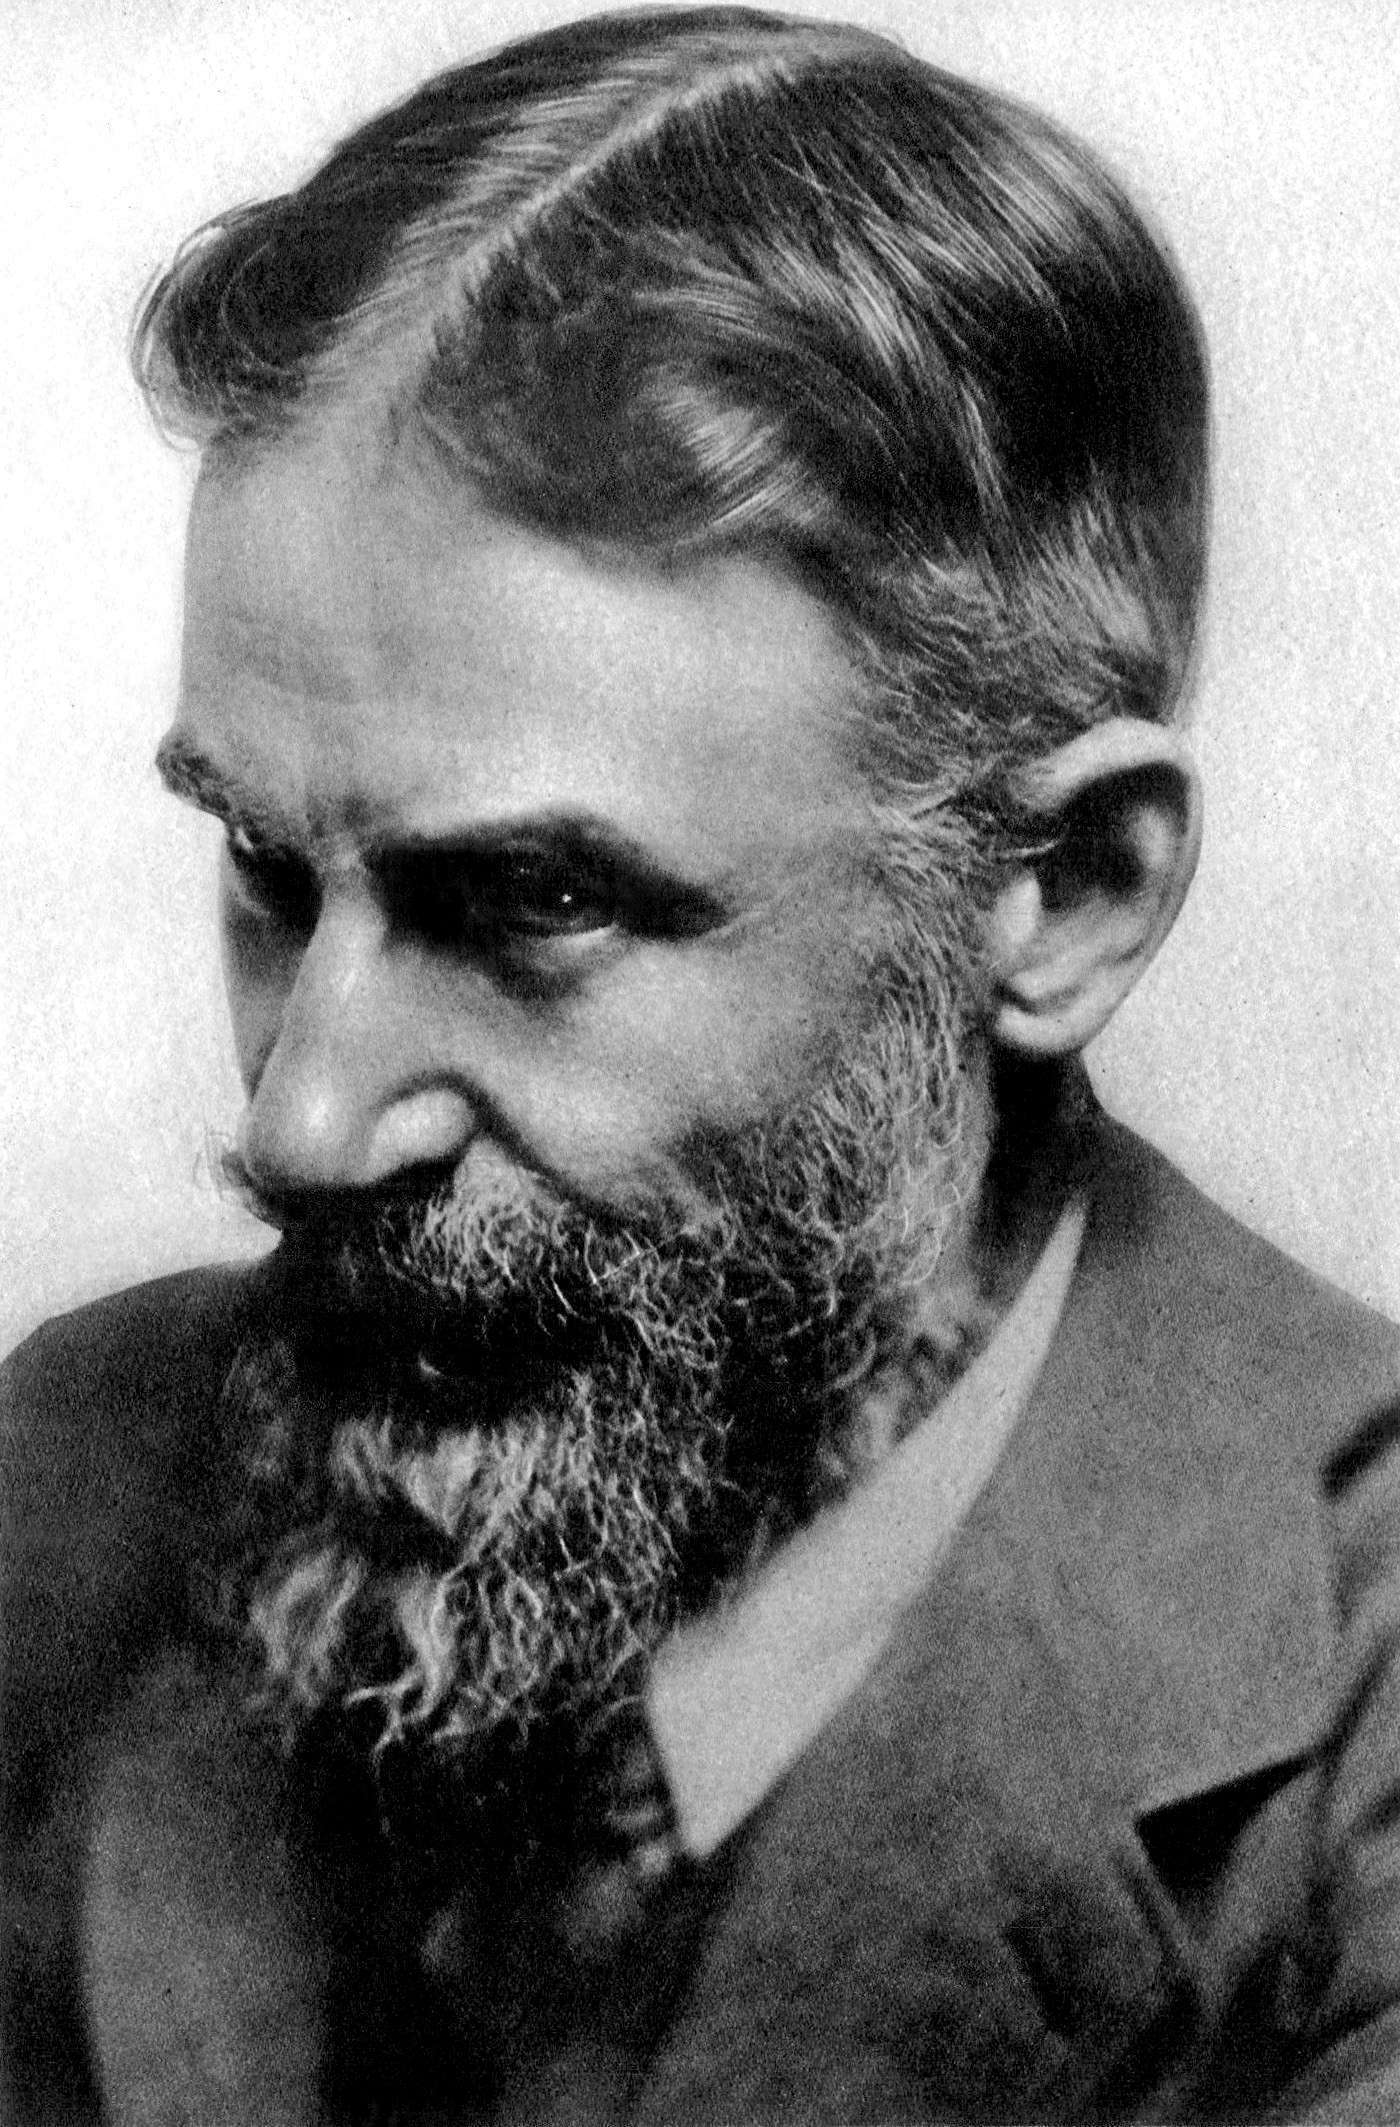 Bernard Shaw in 1905